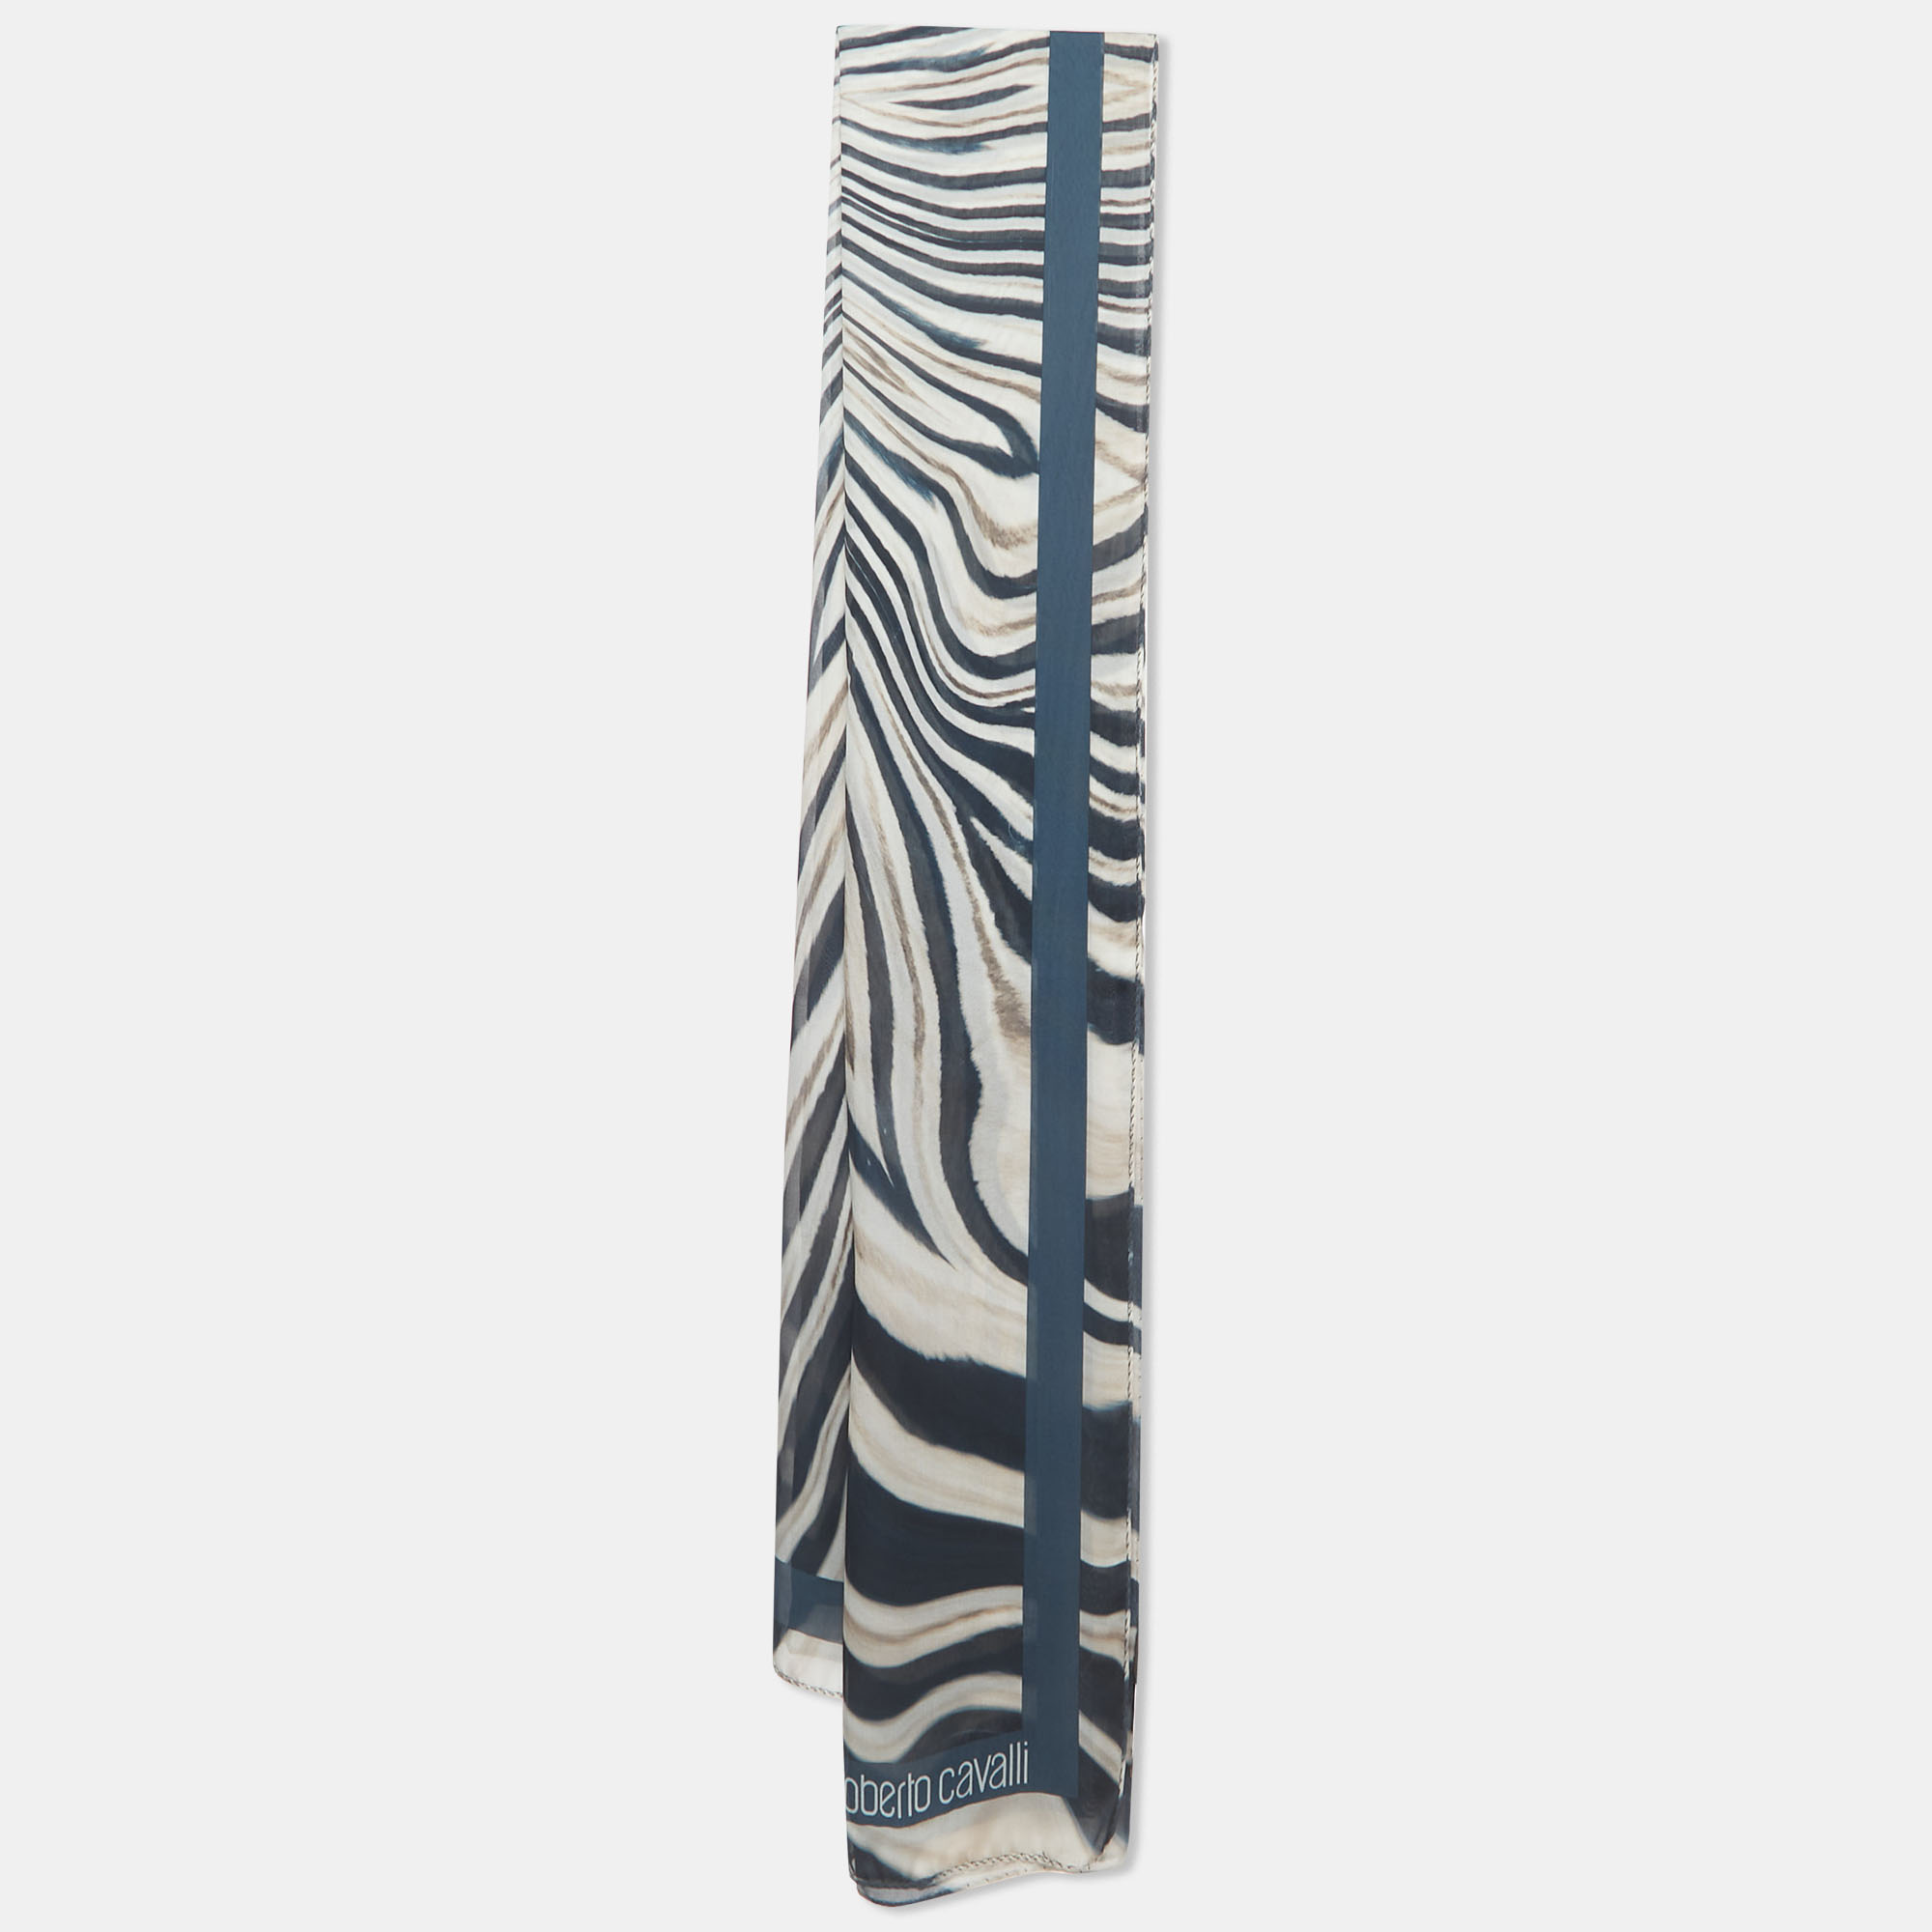 Roberto cavalli beige/blue animal print silk chiffon scarf